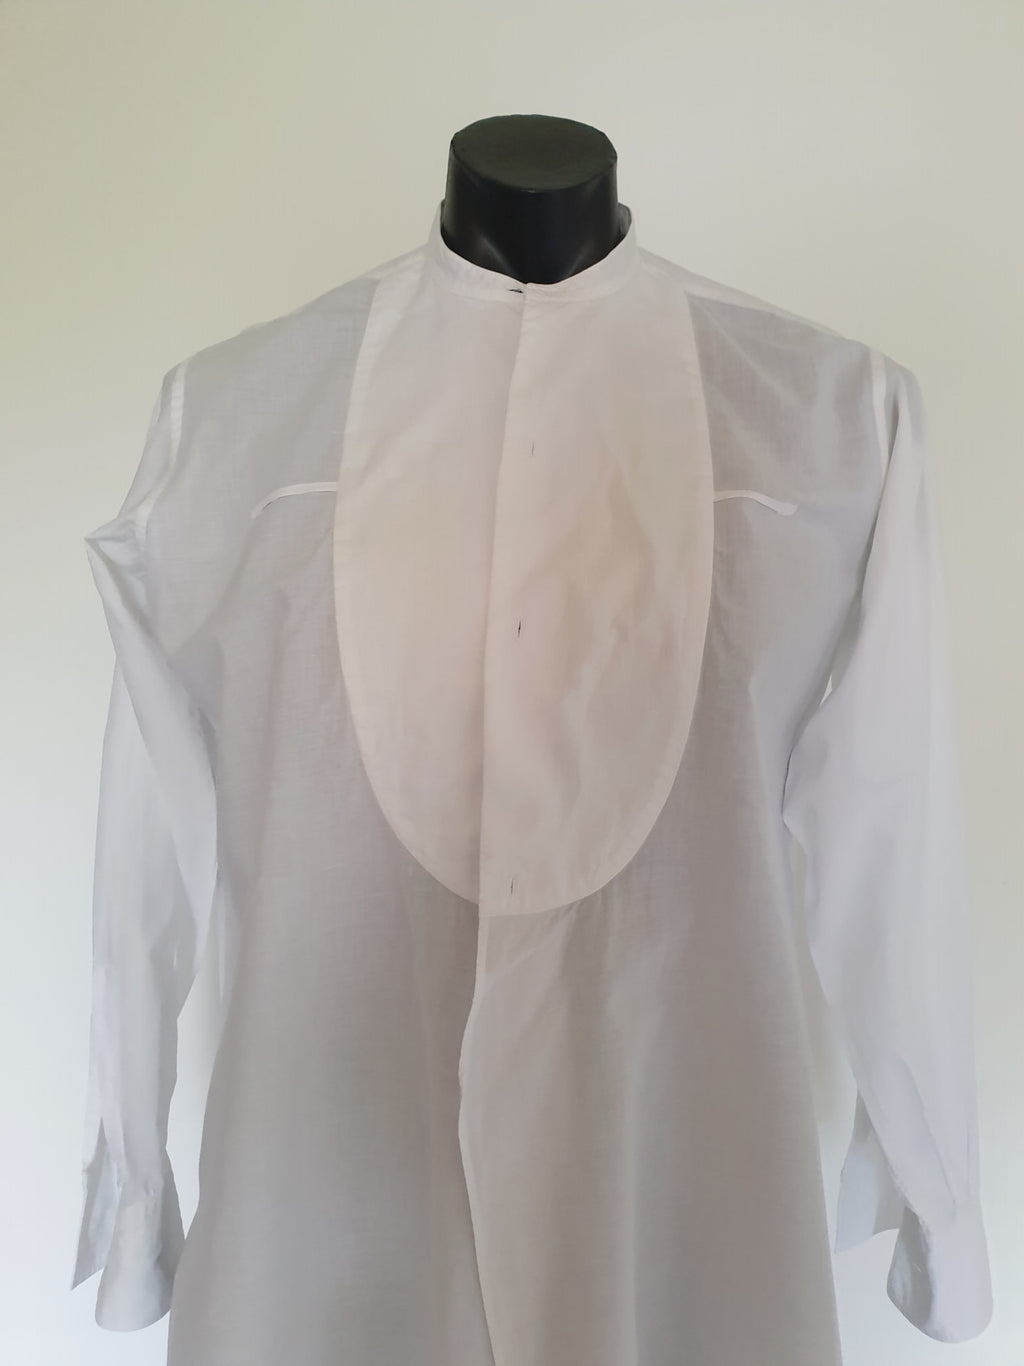 1950s vintage band neck dress shirt formal shirt by welmar neck 15